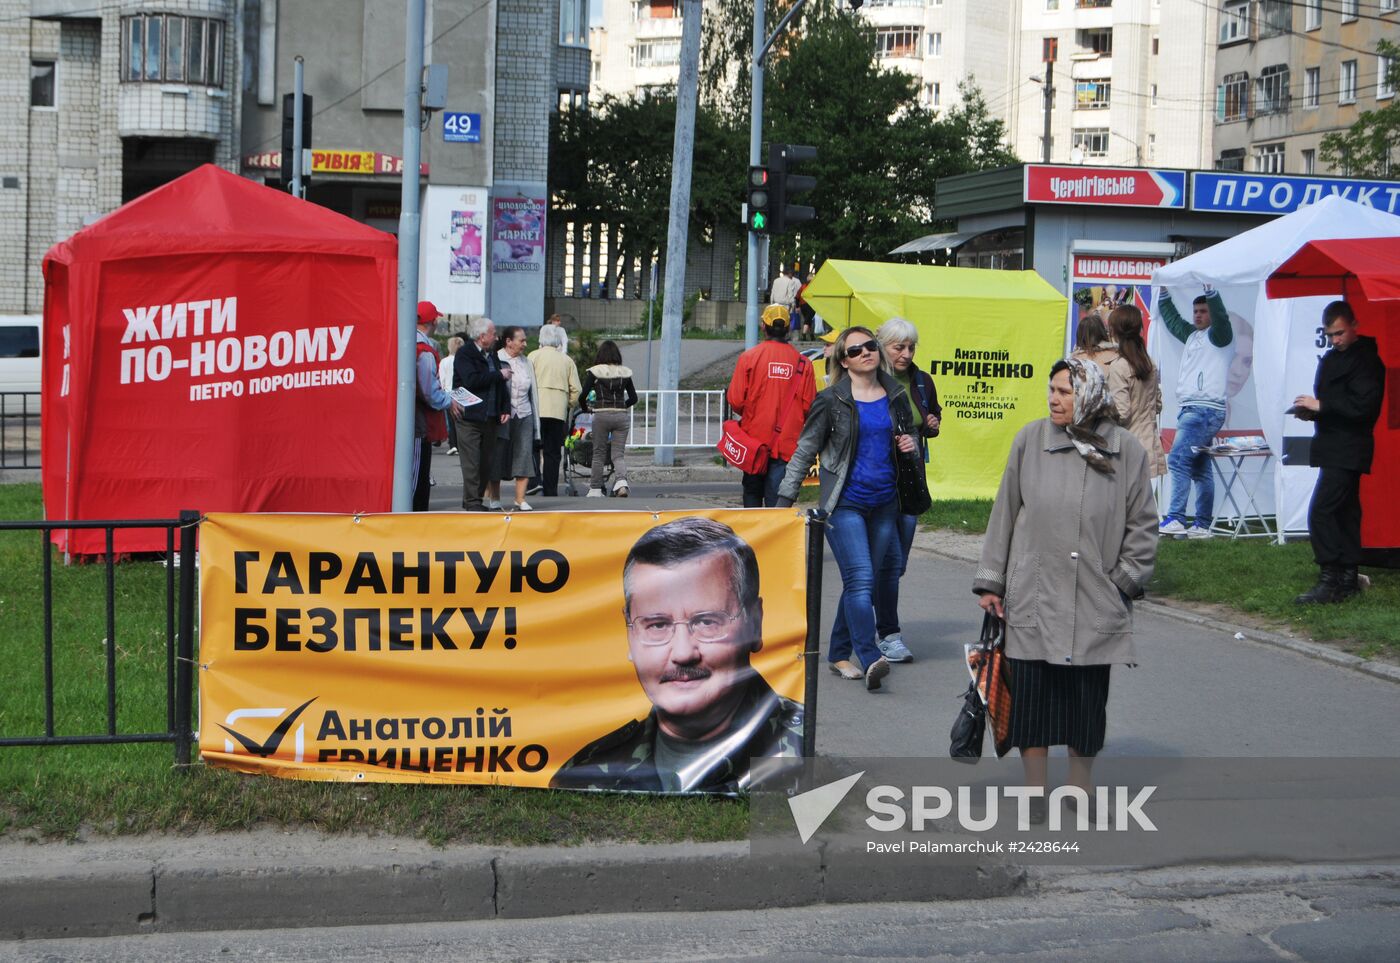 Election billboards in Lviv